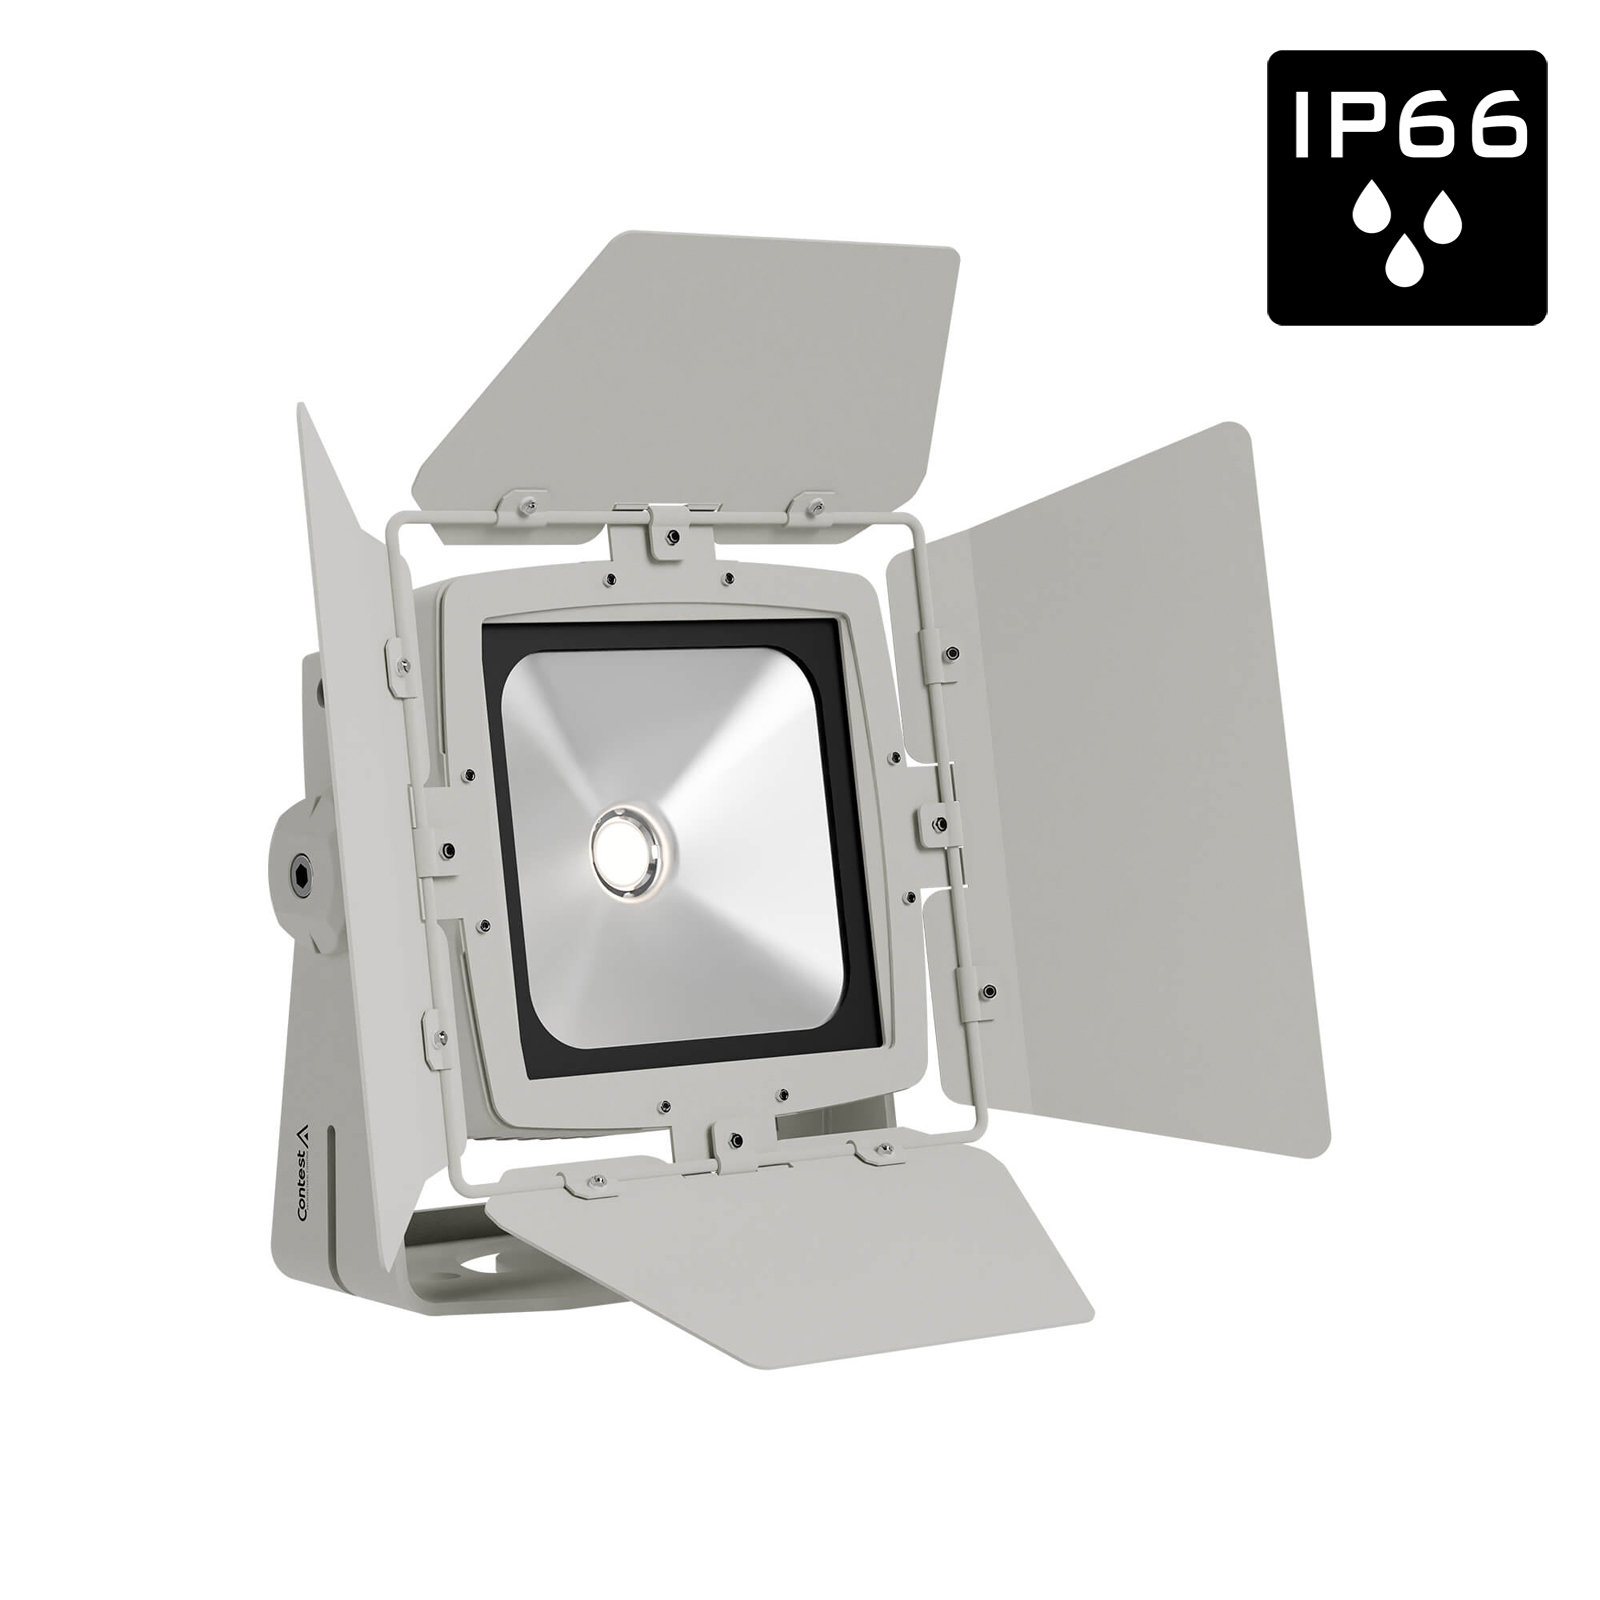 Architectural spotlight IP66 COB 60W Dynamic White 27006300K 60-